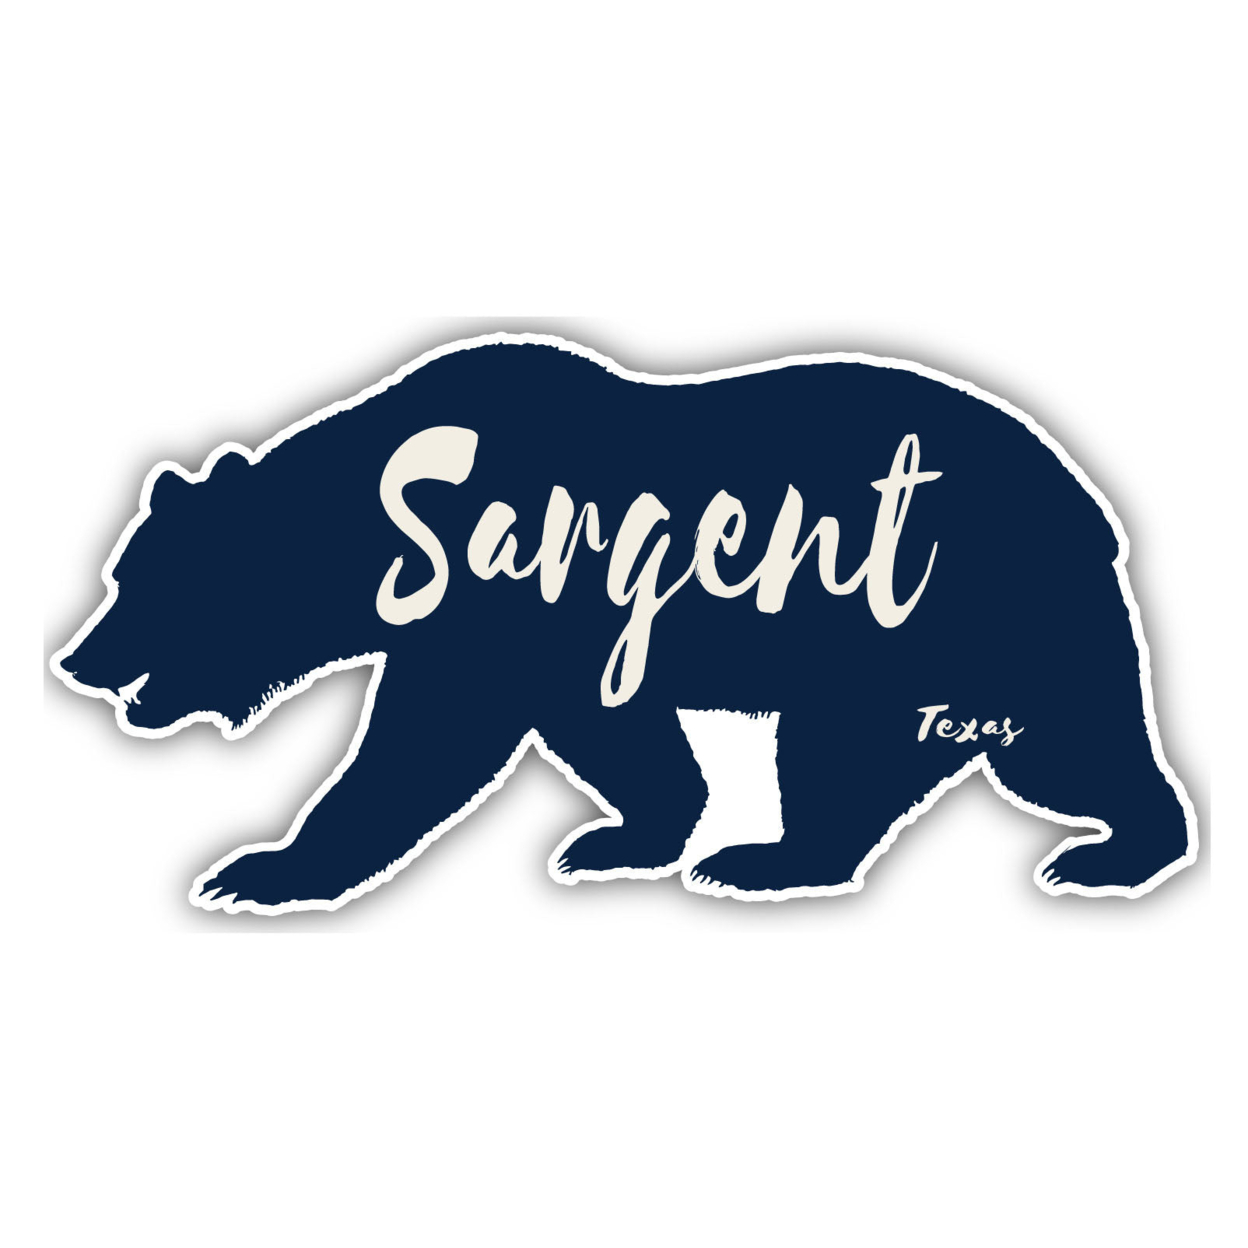 Sargent Texas Souvenir Decorative Stickers (Choose Theme And Size) - Single Unit, 2-Inch, Bear